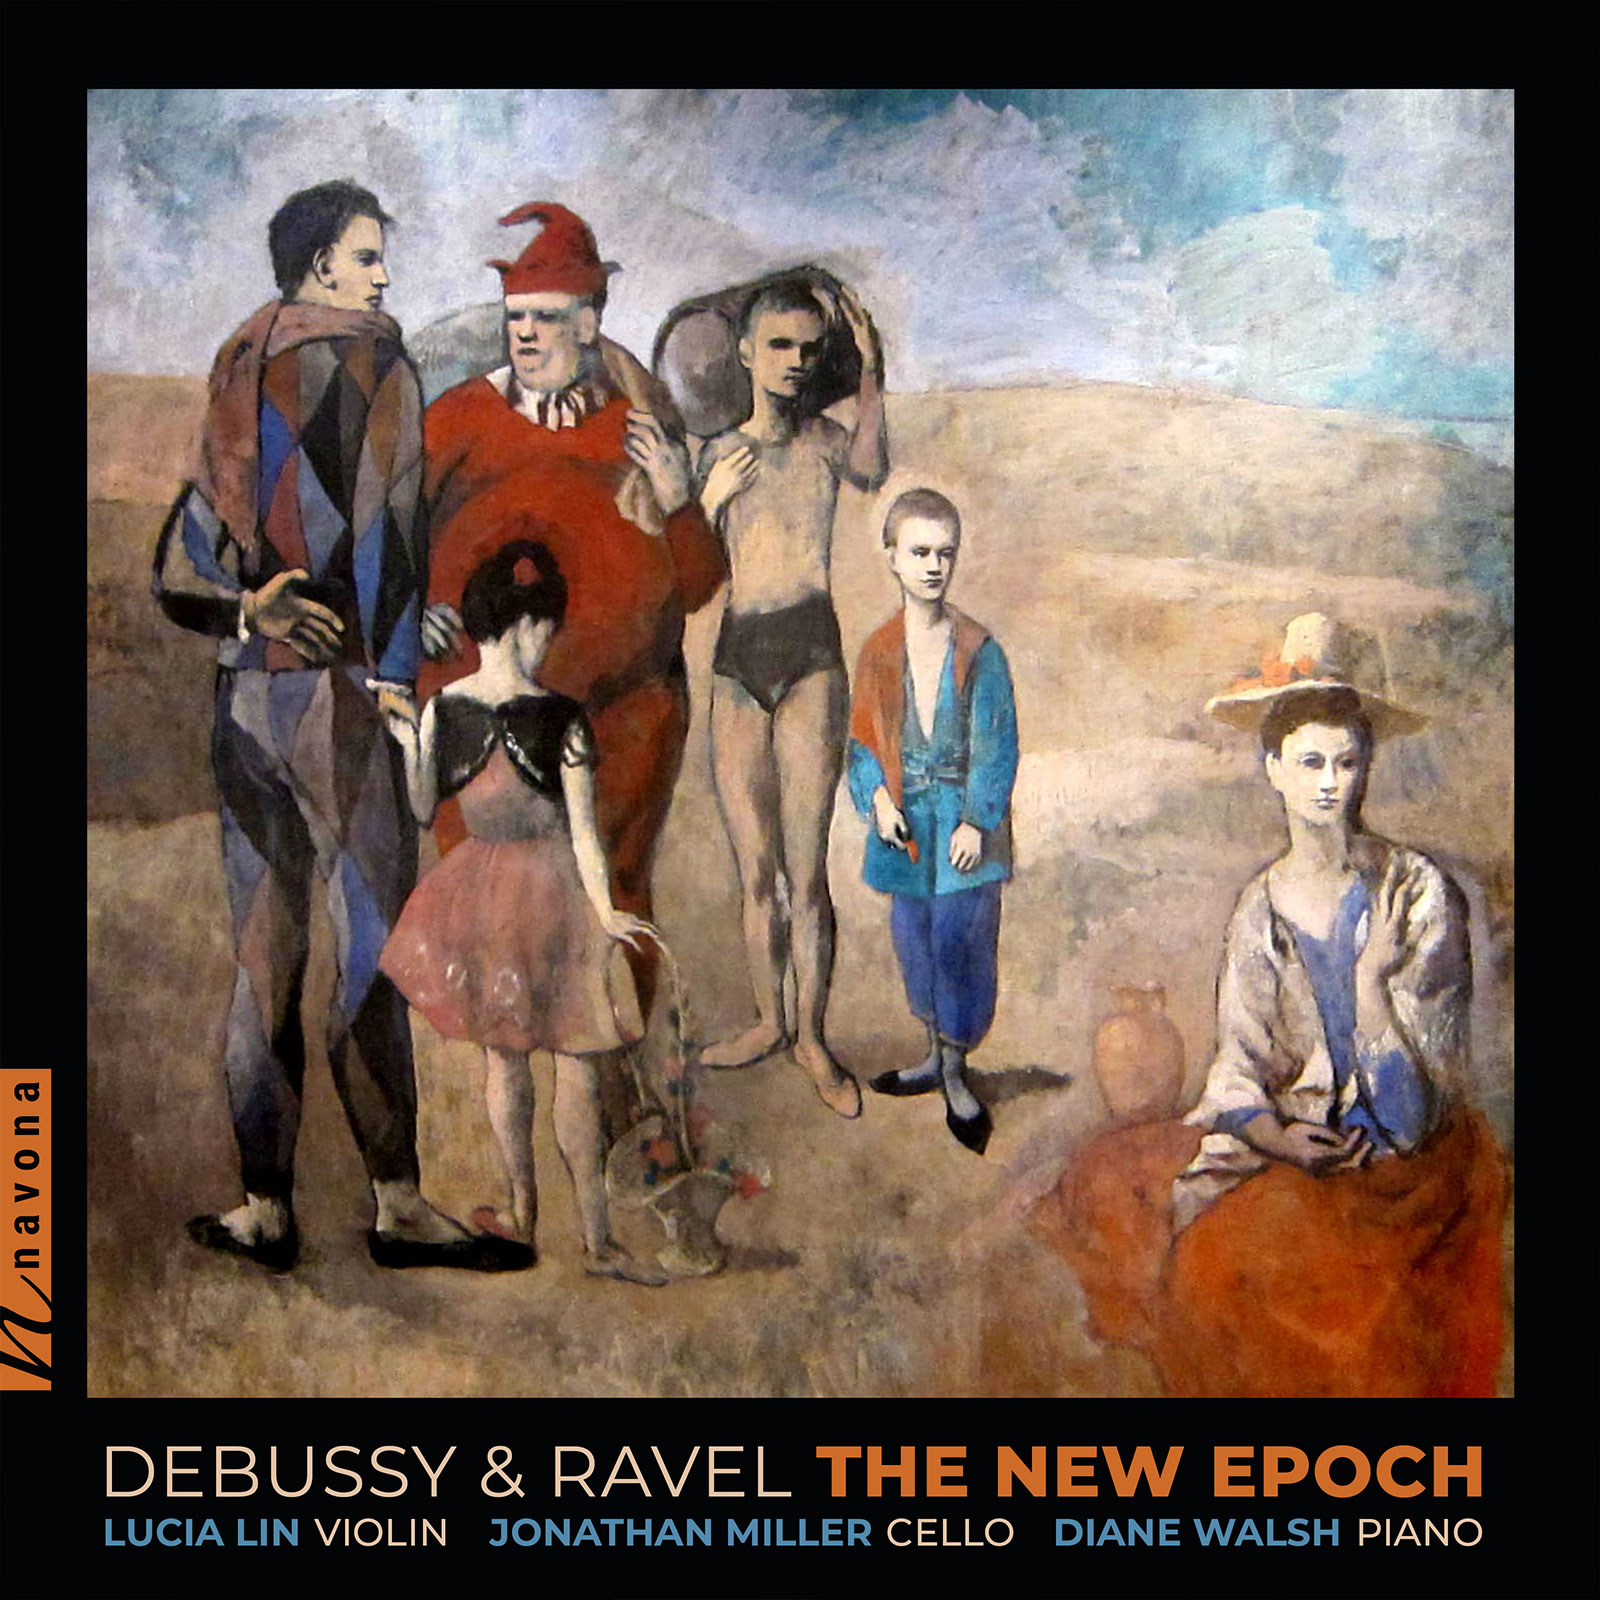 THE NEW EPOCH - Album Cover